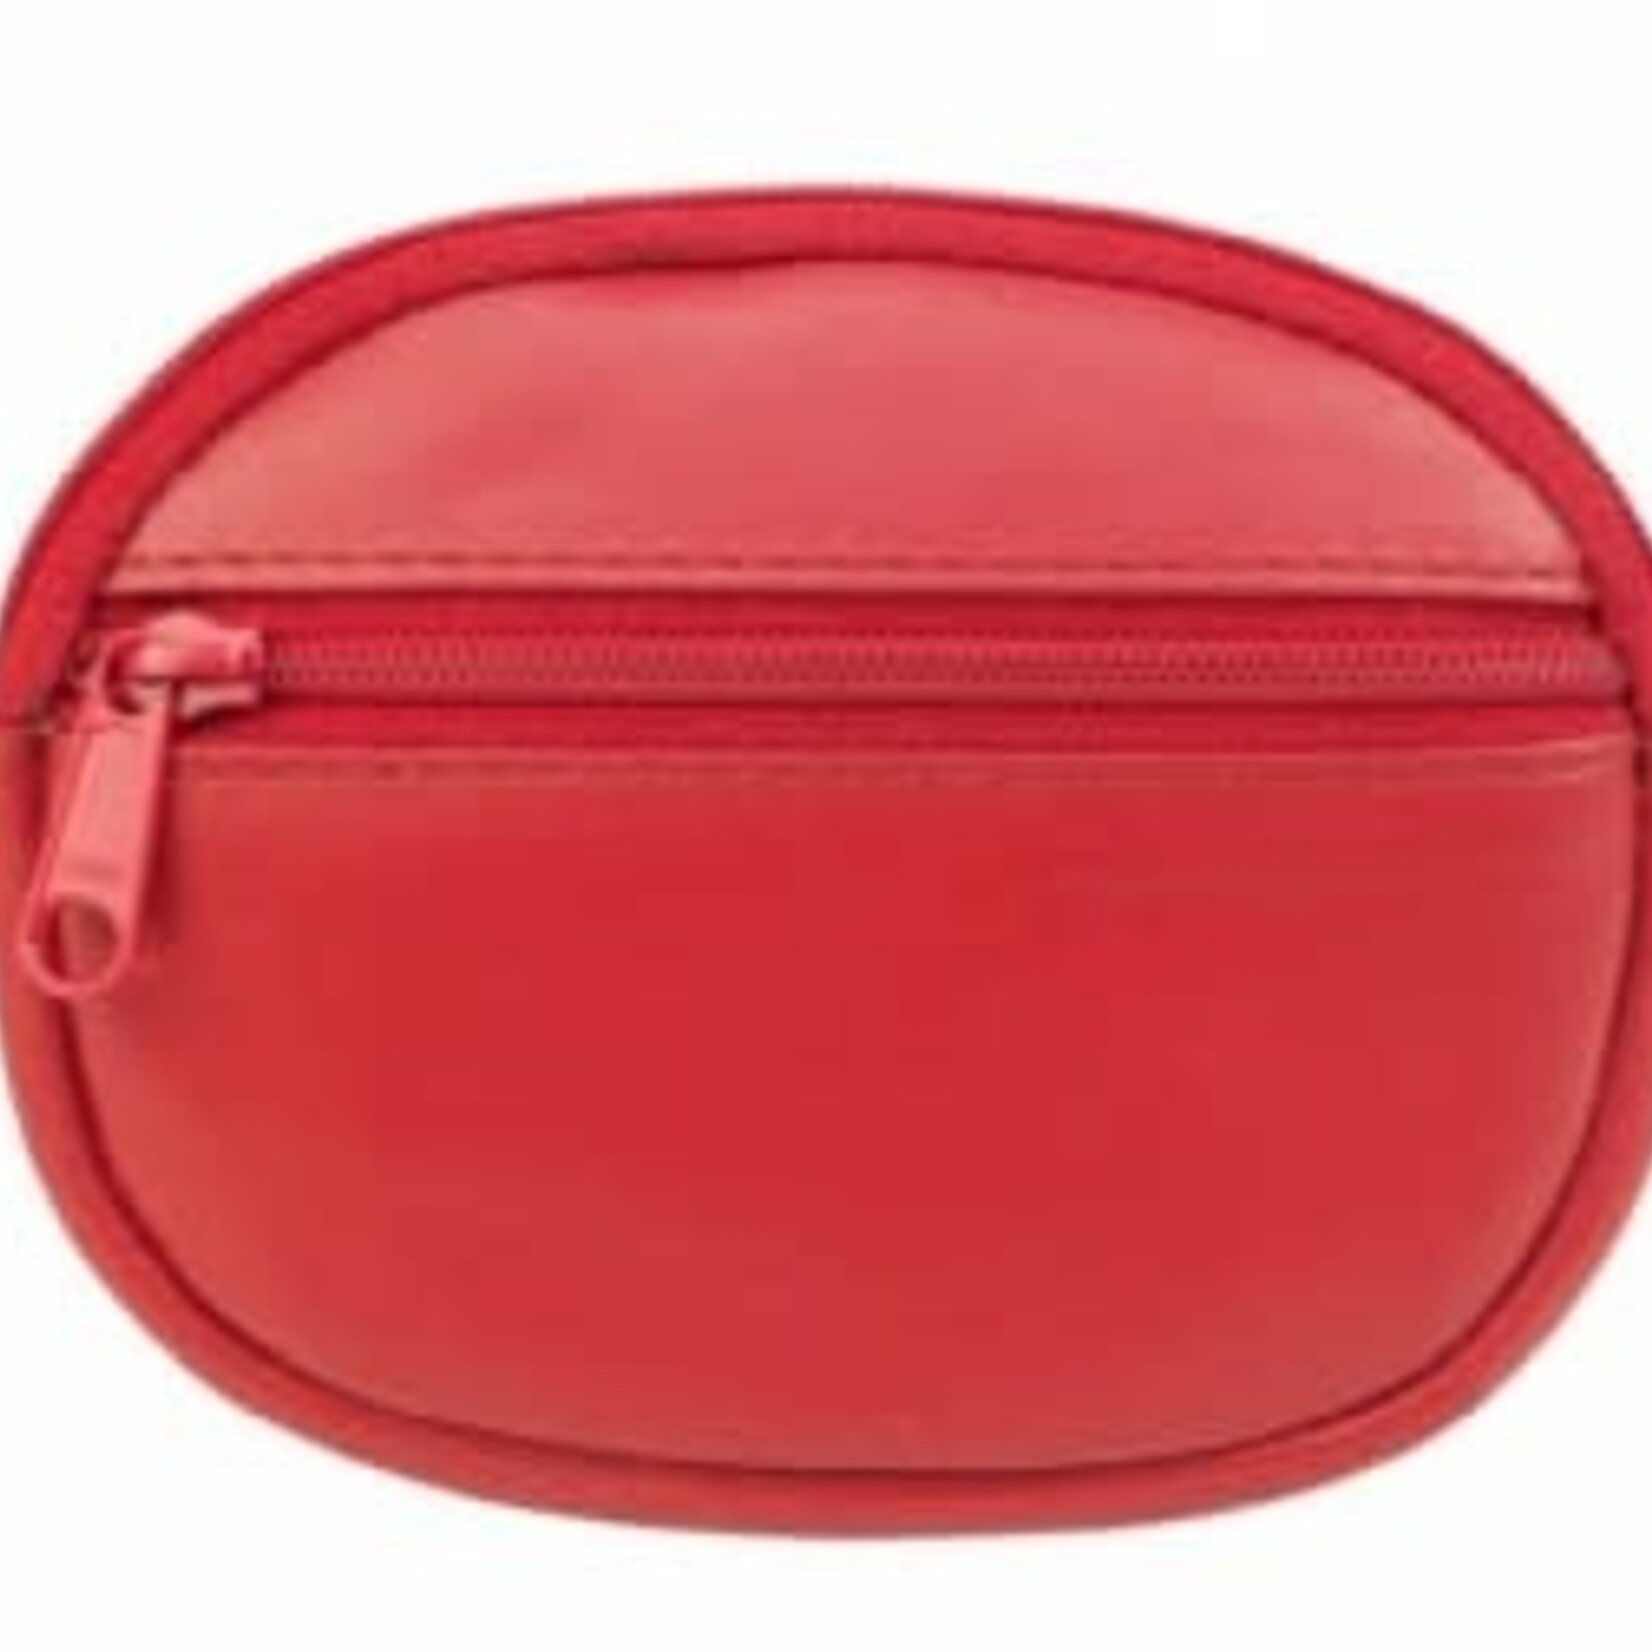 franco bonini red small oval leather coin purse